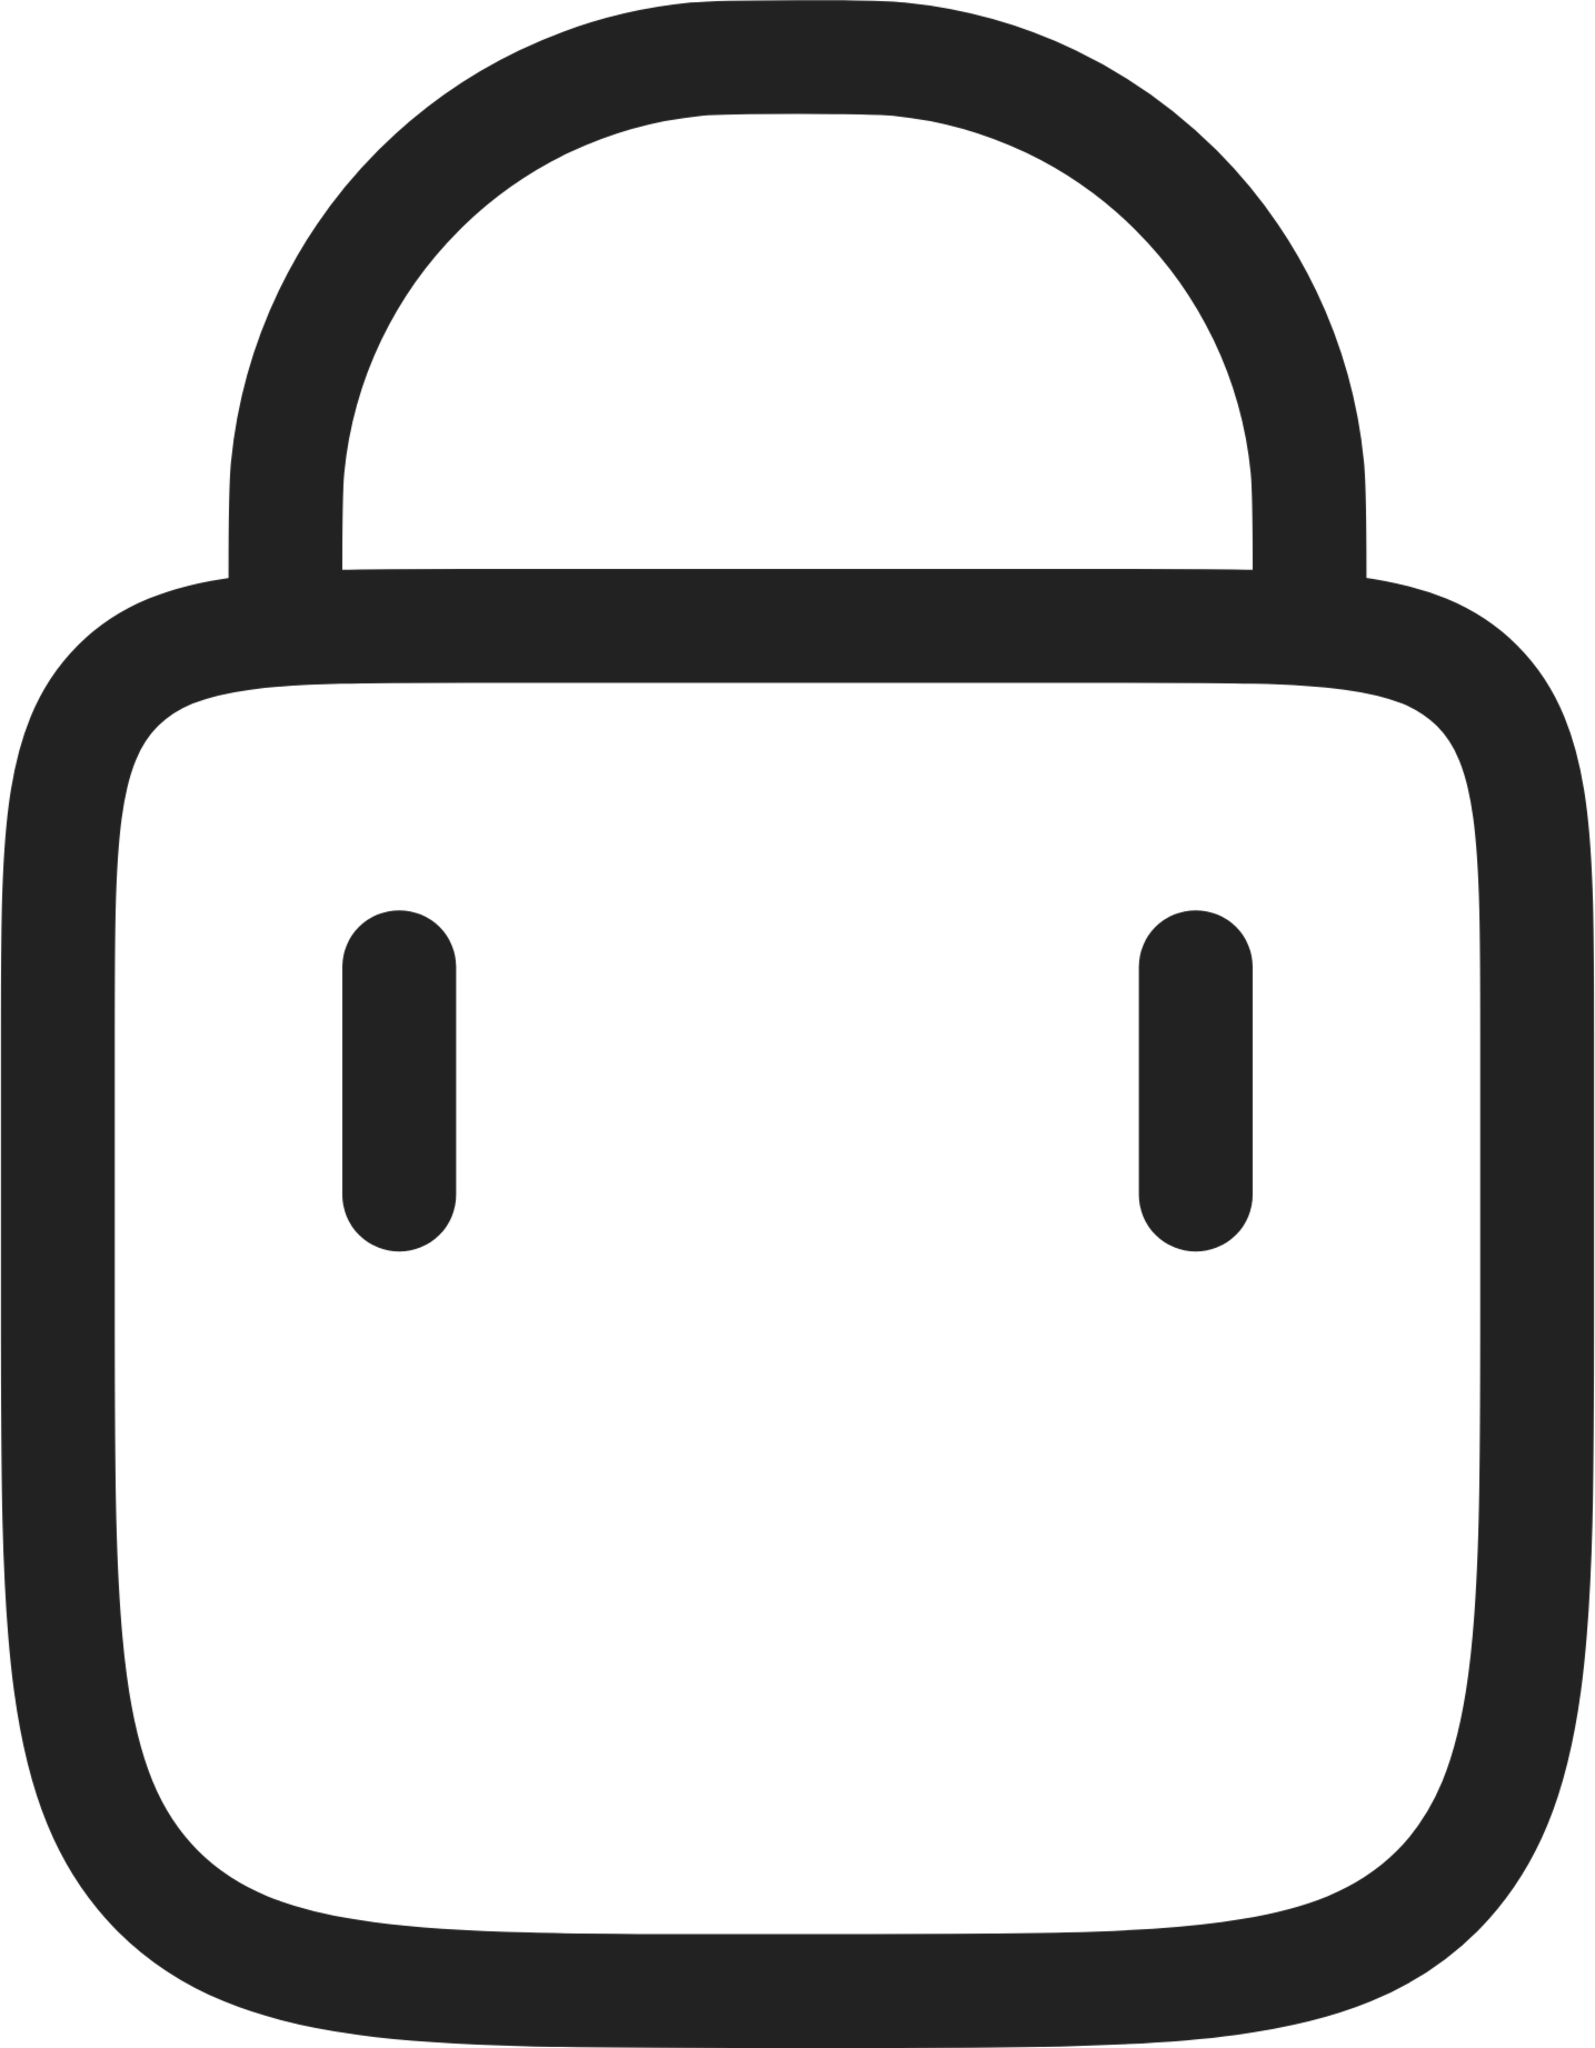 Bag light icon